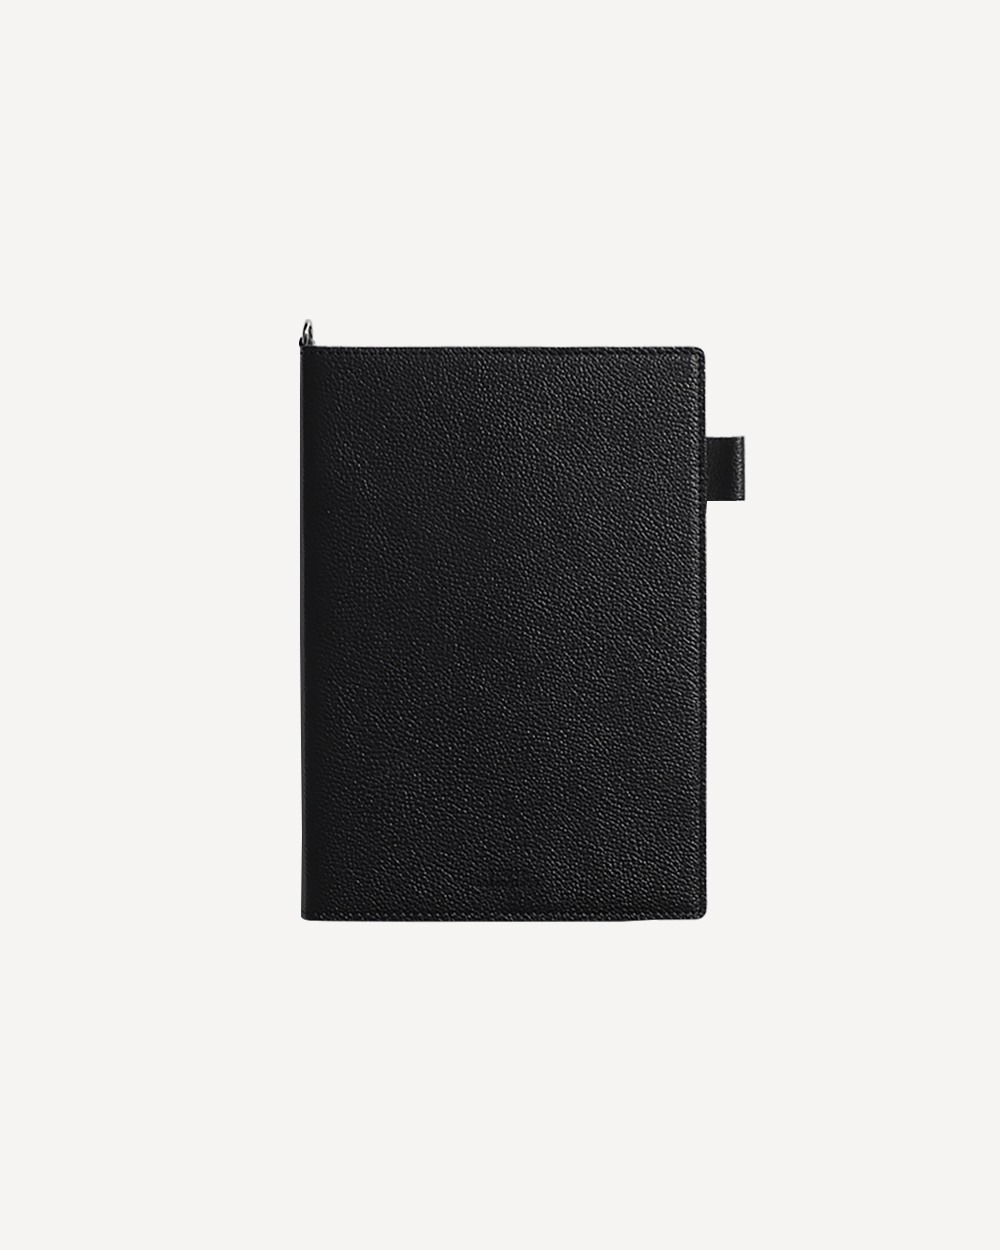 Proper Leather Cover (B6) / Black